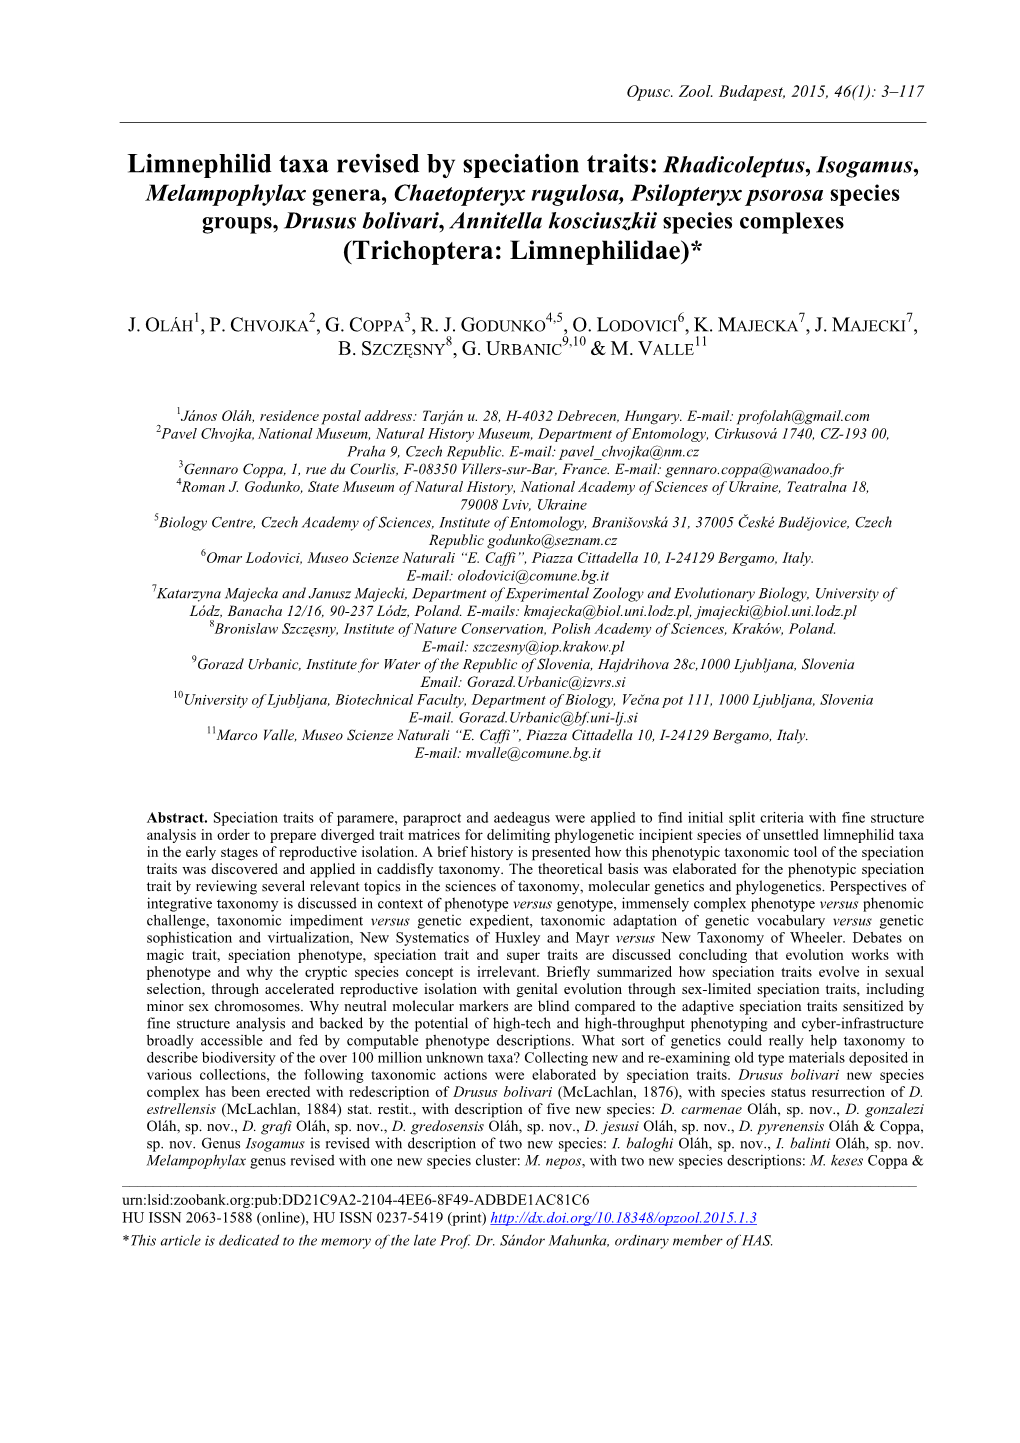 Limnephilid Taxa Revised by Speciation Traits: Rhadicoleptus, Isogamus, (Trichoptera: Limnephilidae)